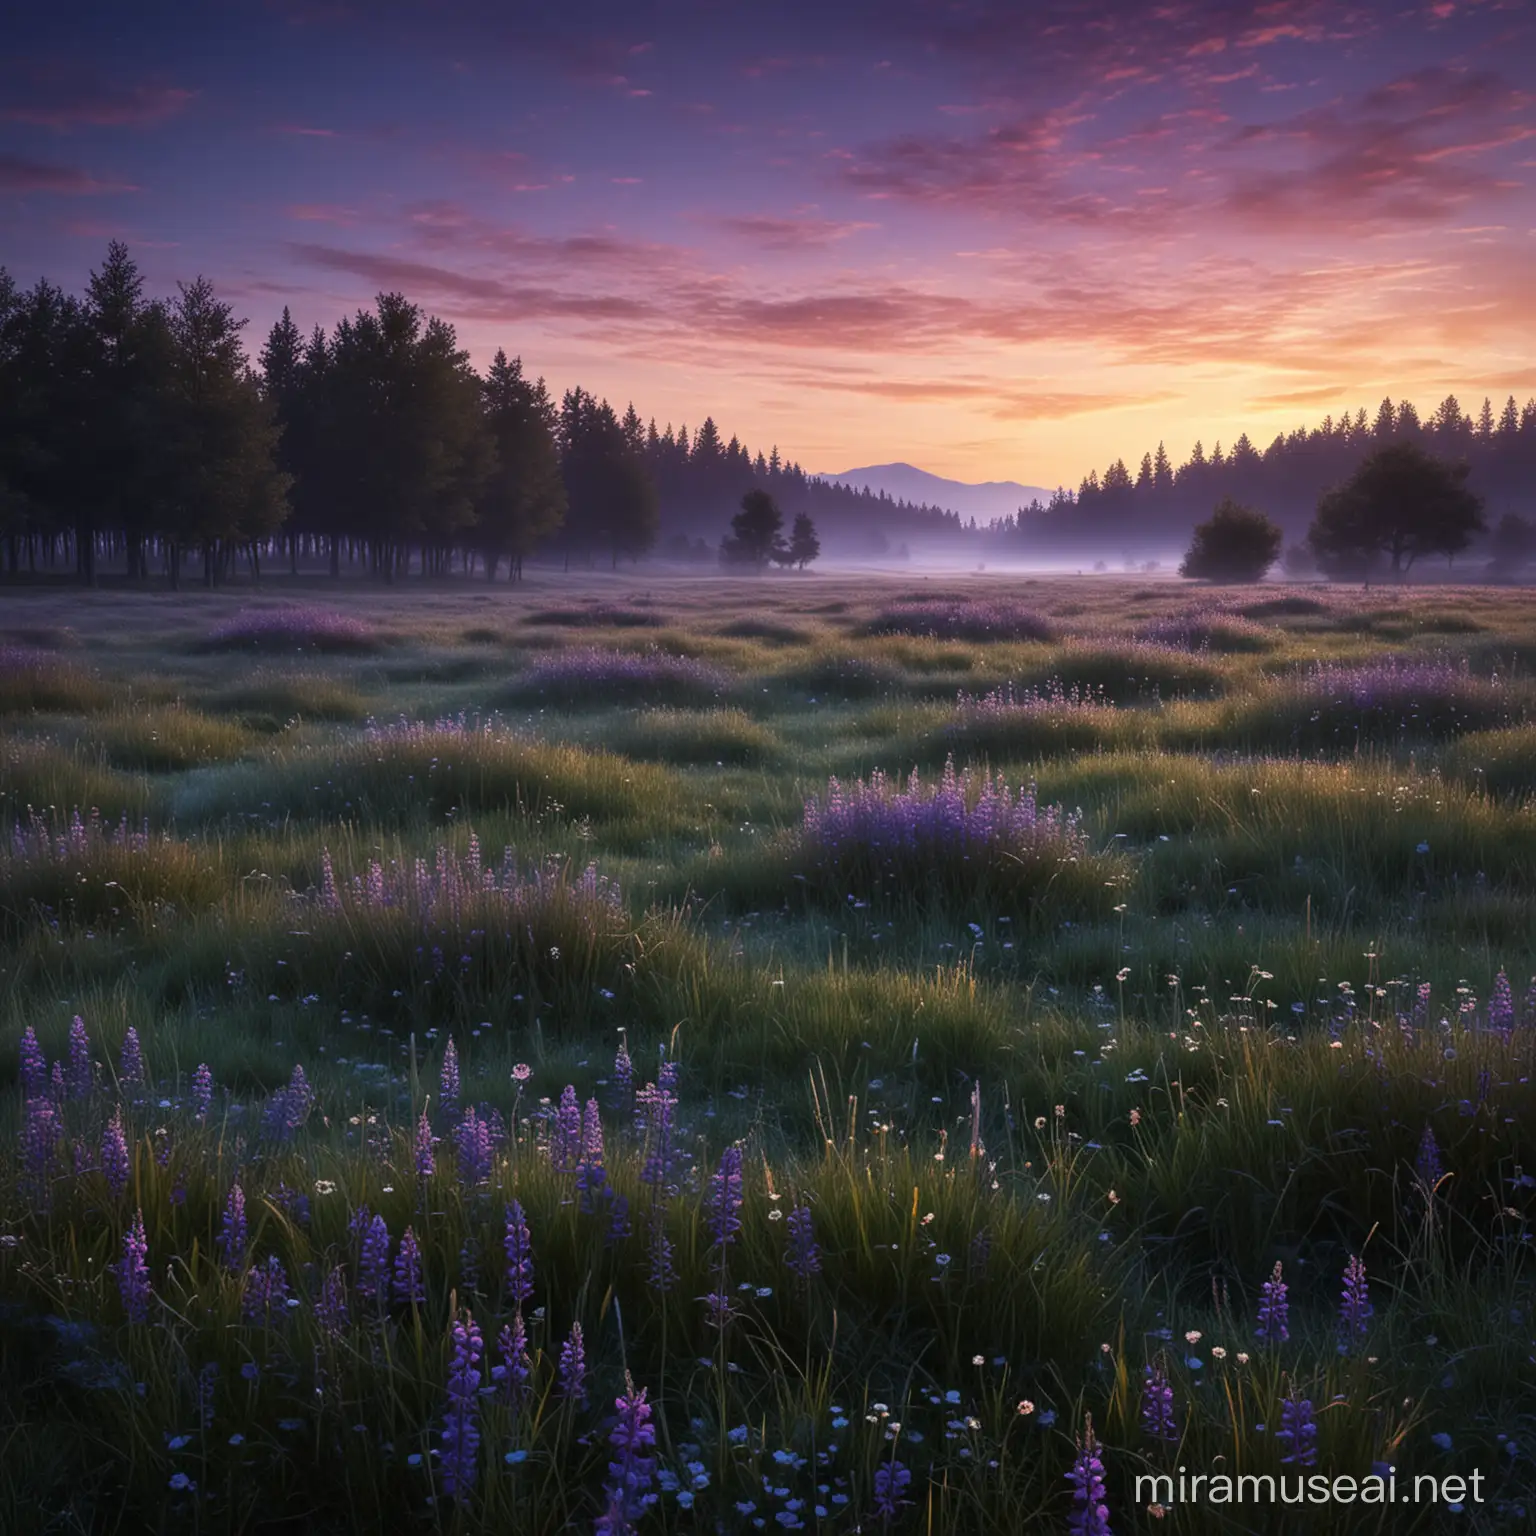 Twilight Meadow Background

